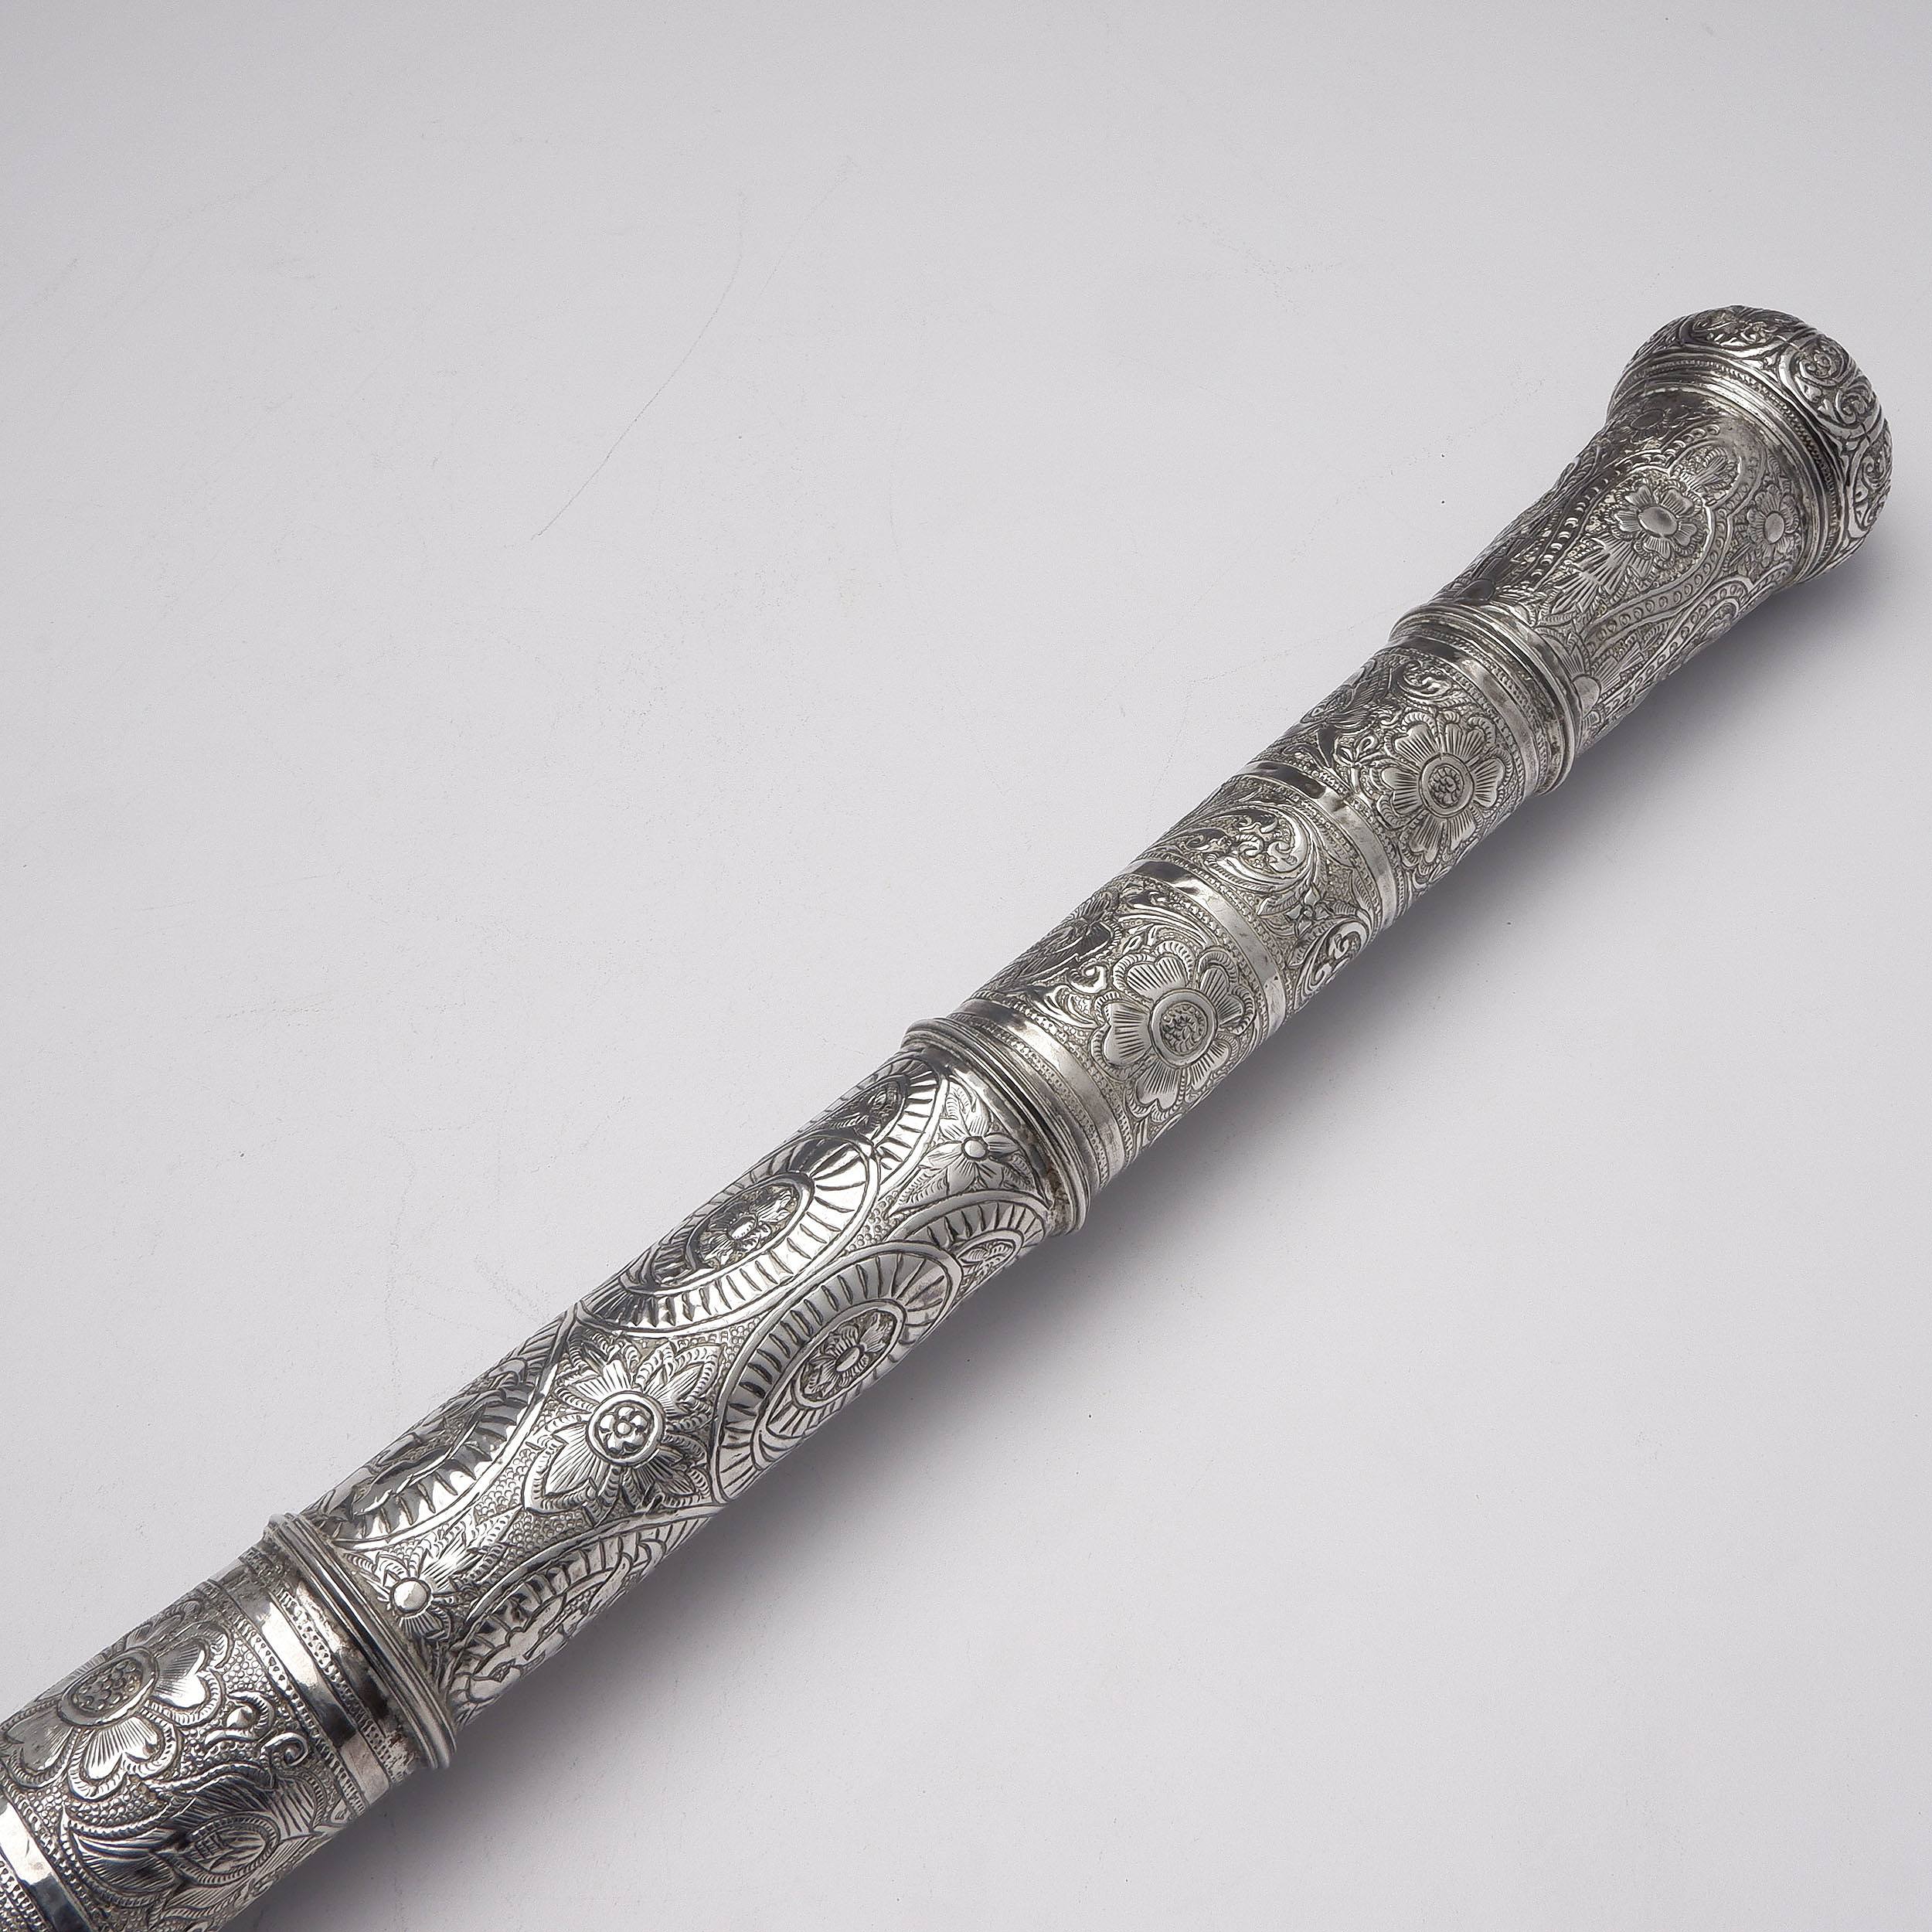 'Profusely Engraved Burmese Silver Cased Sword'